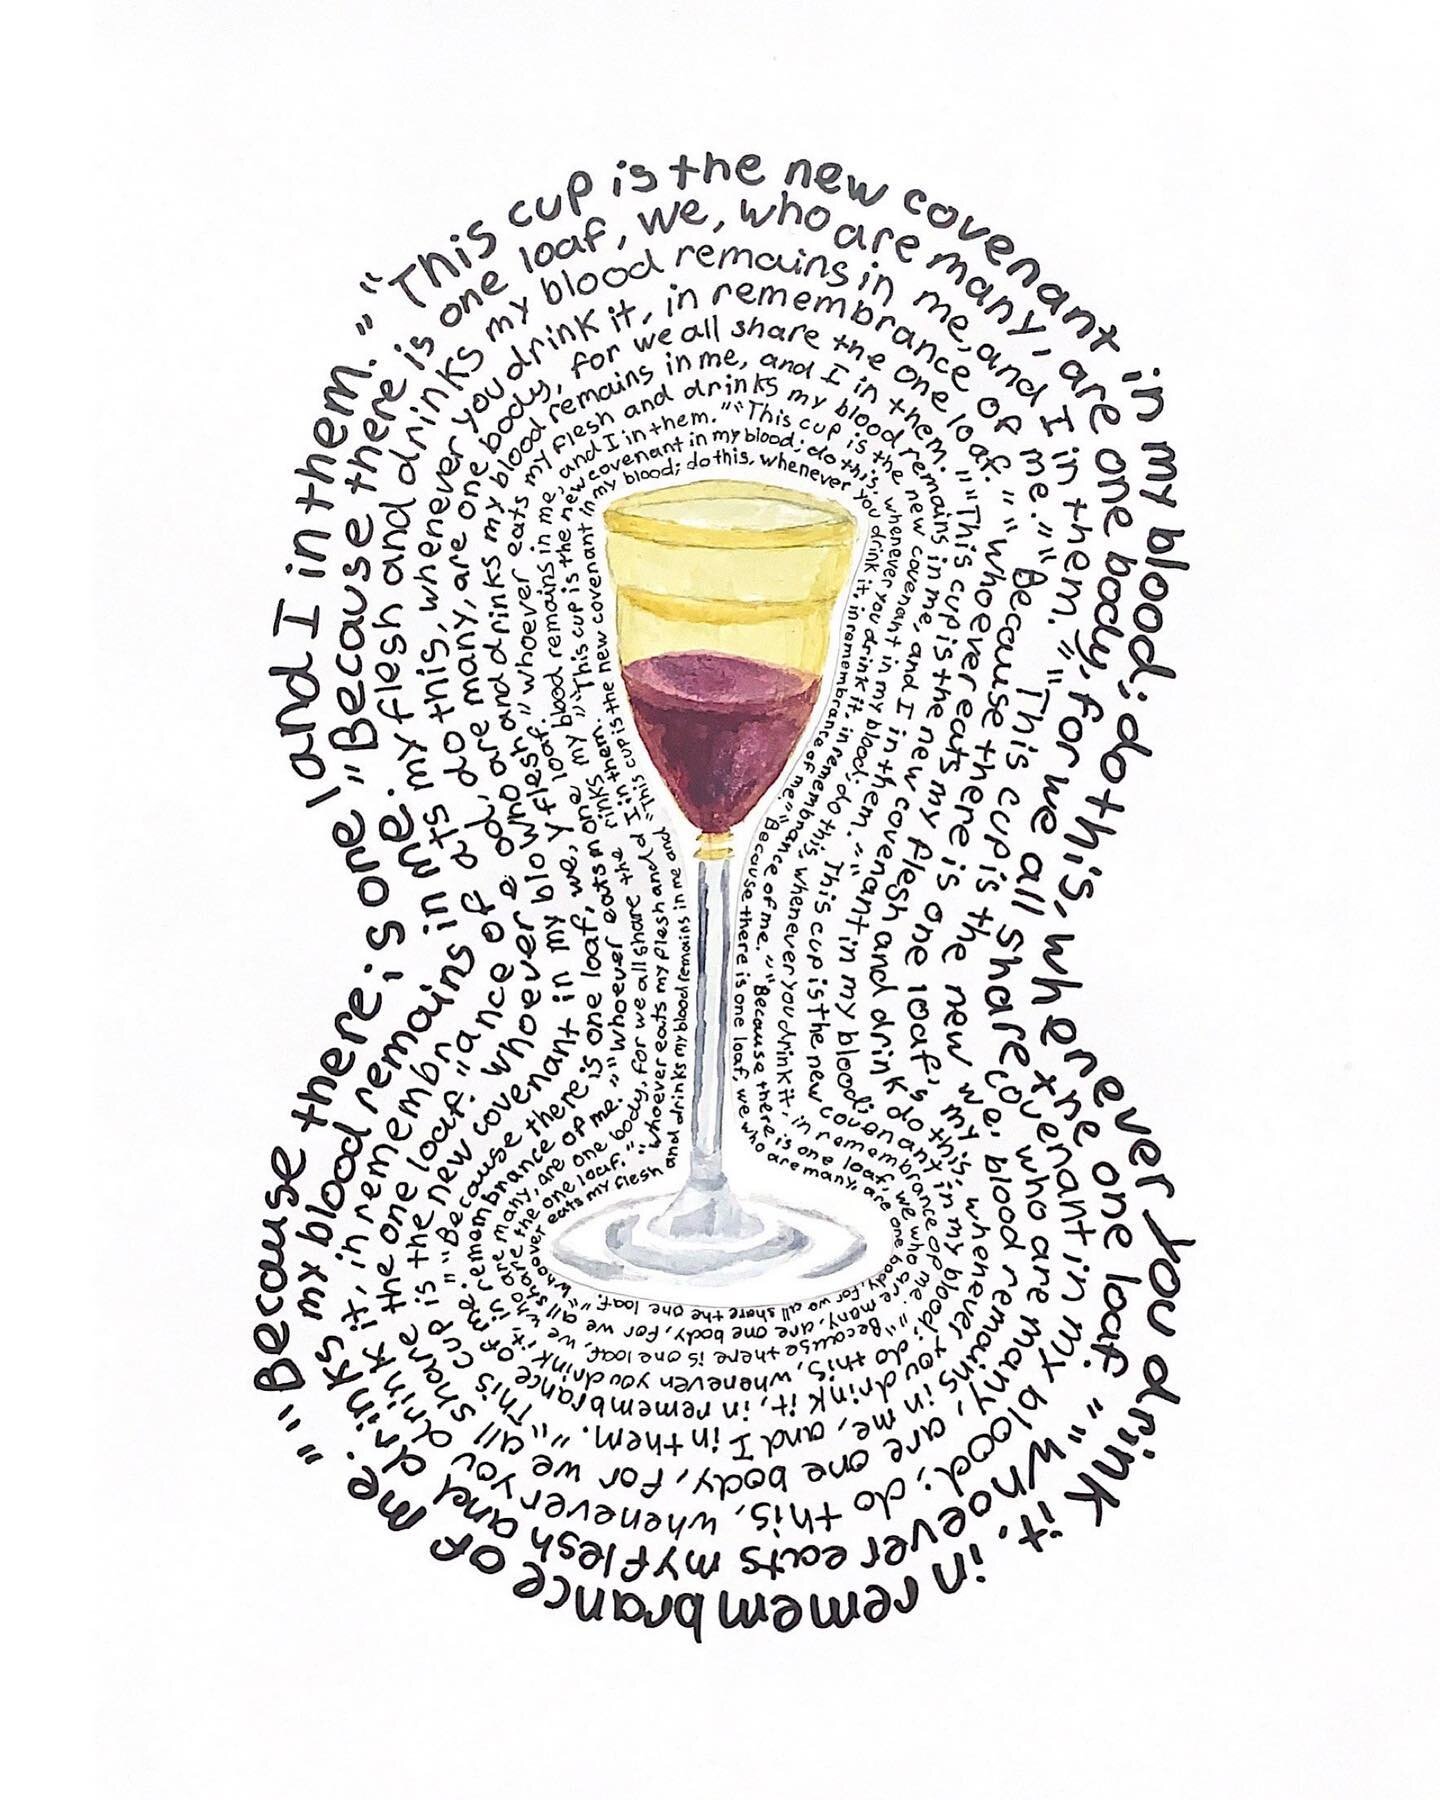 Diva Cup Wine Glass
Jackie Patterson 
-
#lesbian #lesbianzine #queerzine #zine #queerart